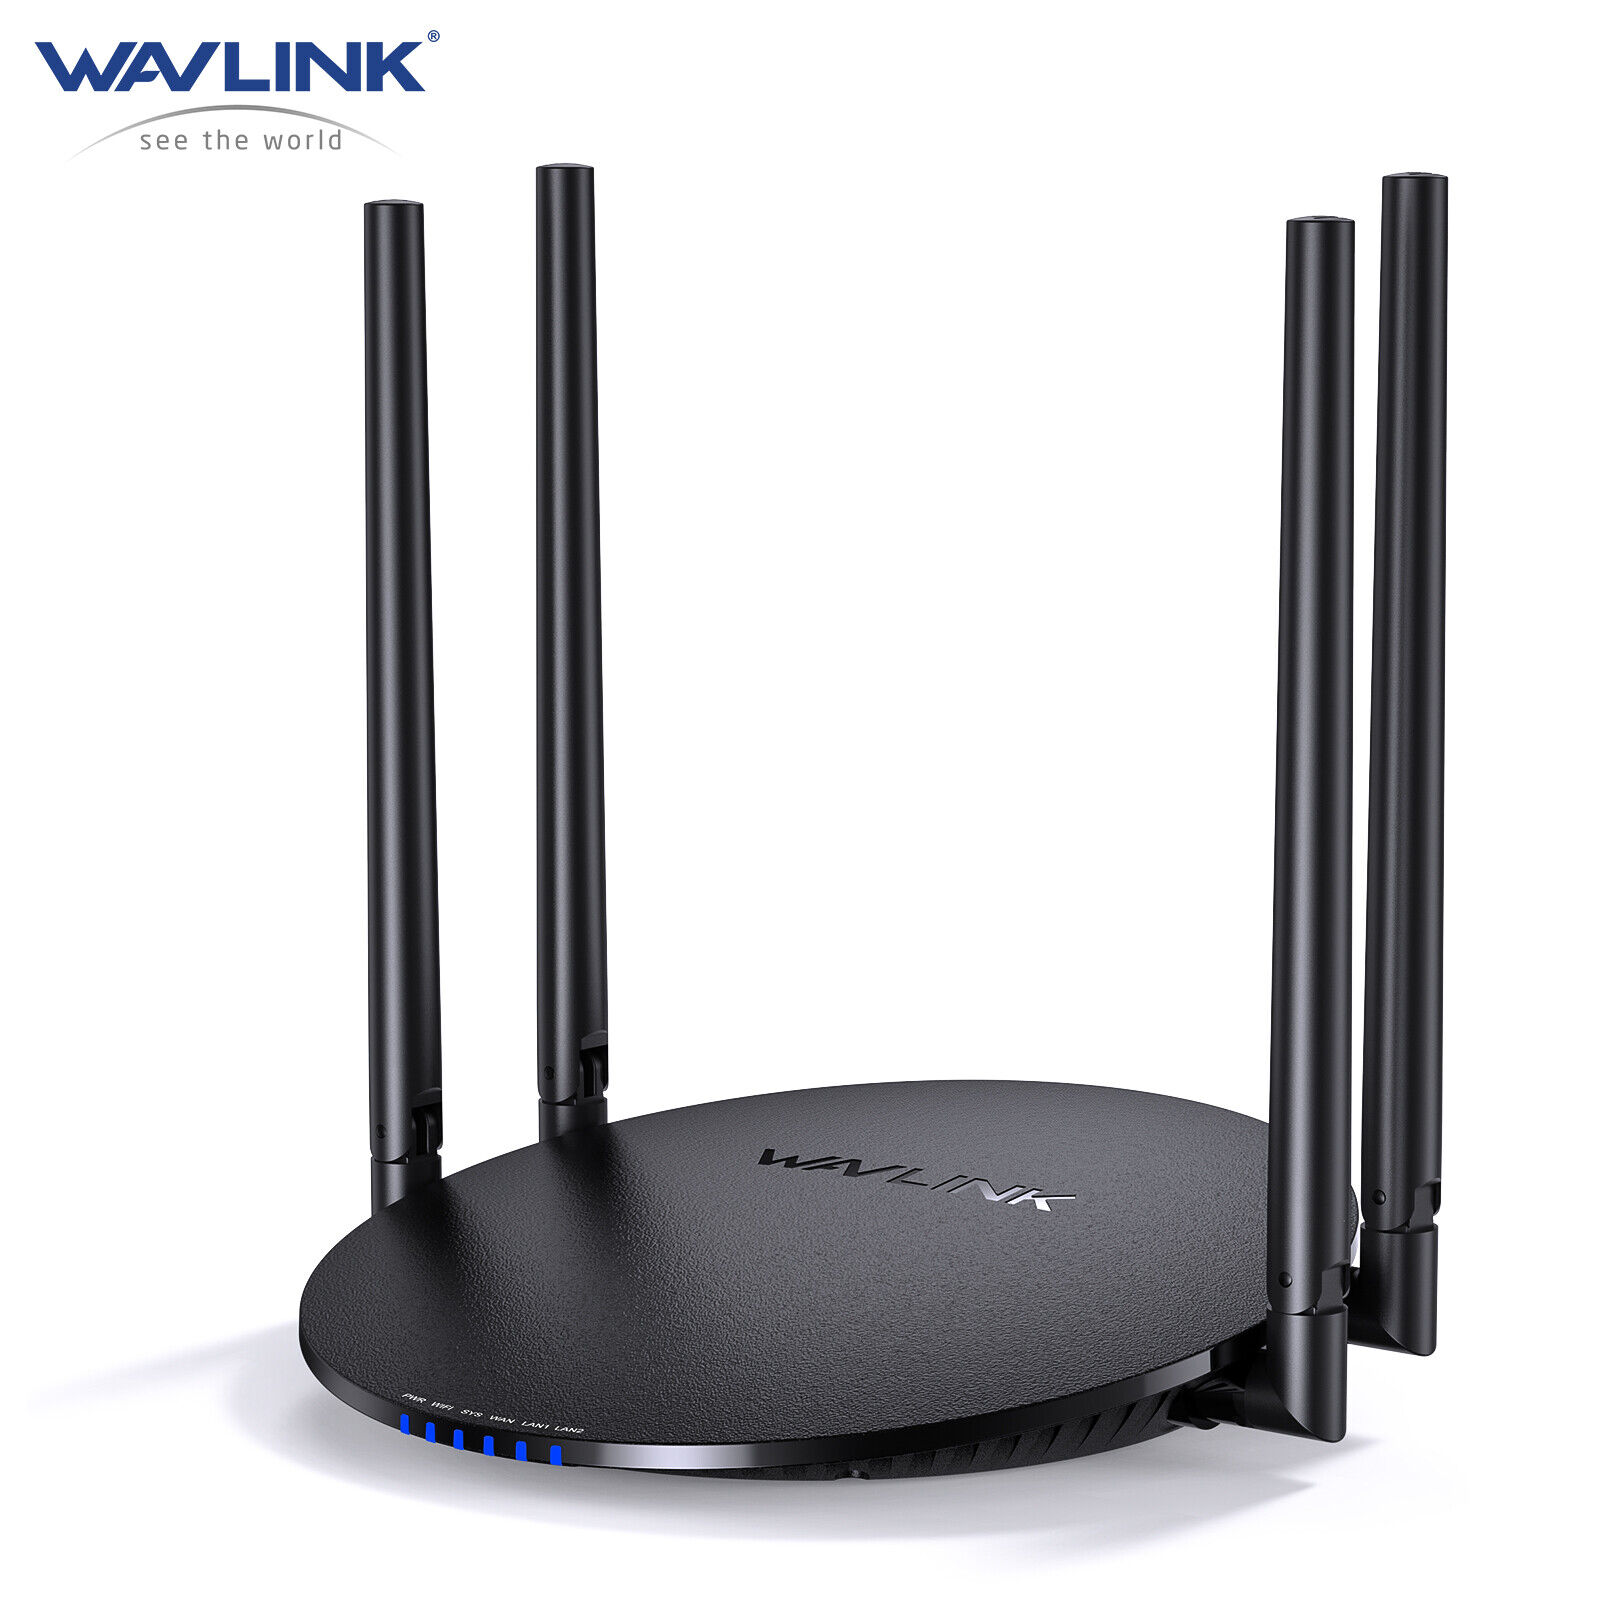 WAVLINK AC1200 Dual Band Full Gigabit Home WiFi Router/ AP / Repeater Wireless